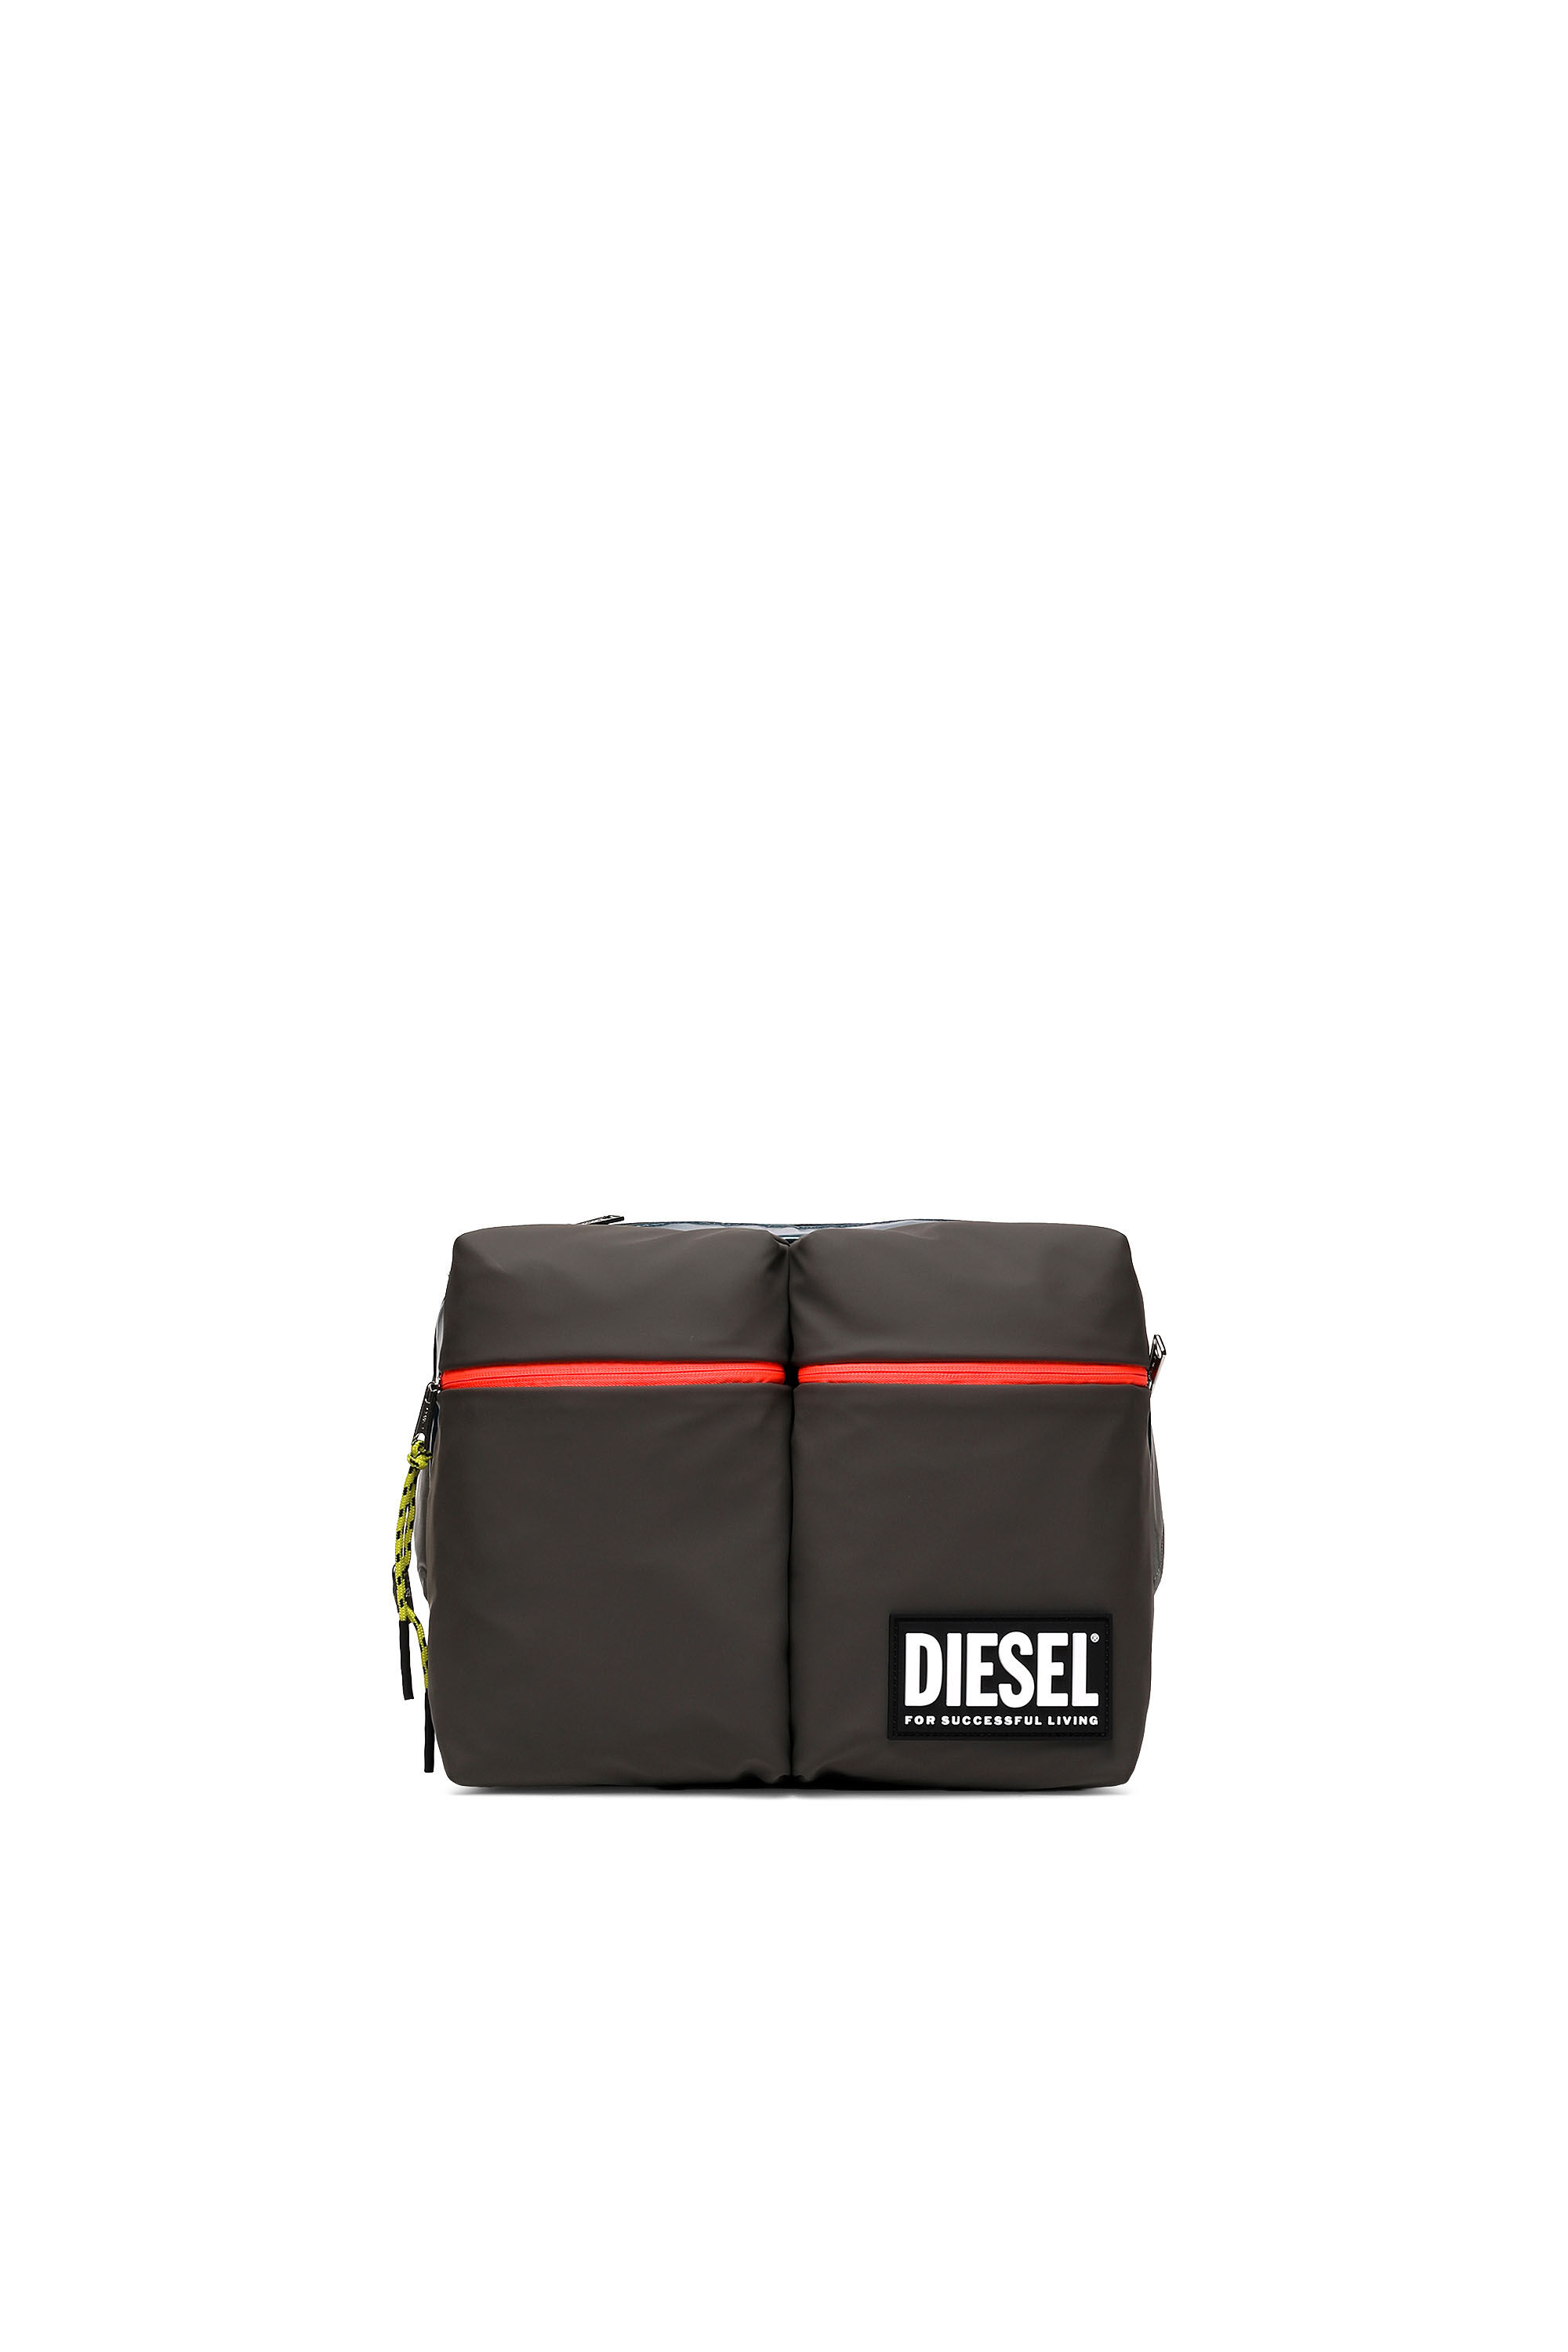 Diesel - CROSYO, Polychrome/Noir - Image 2